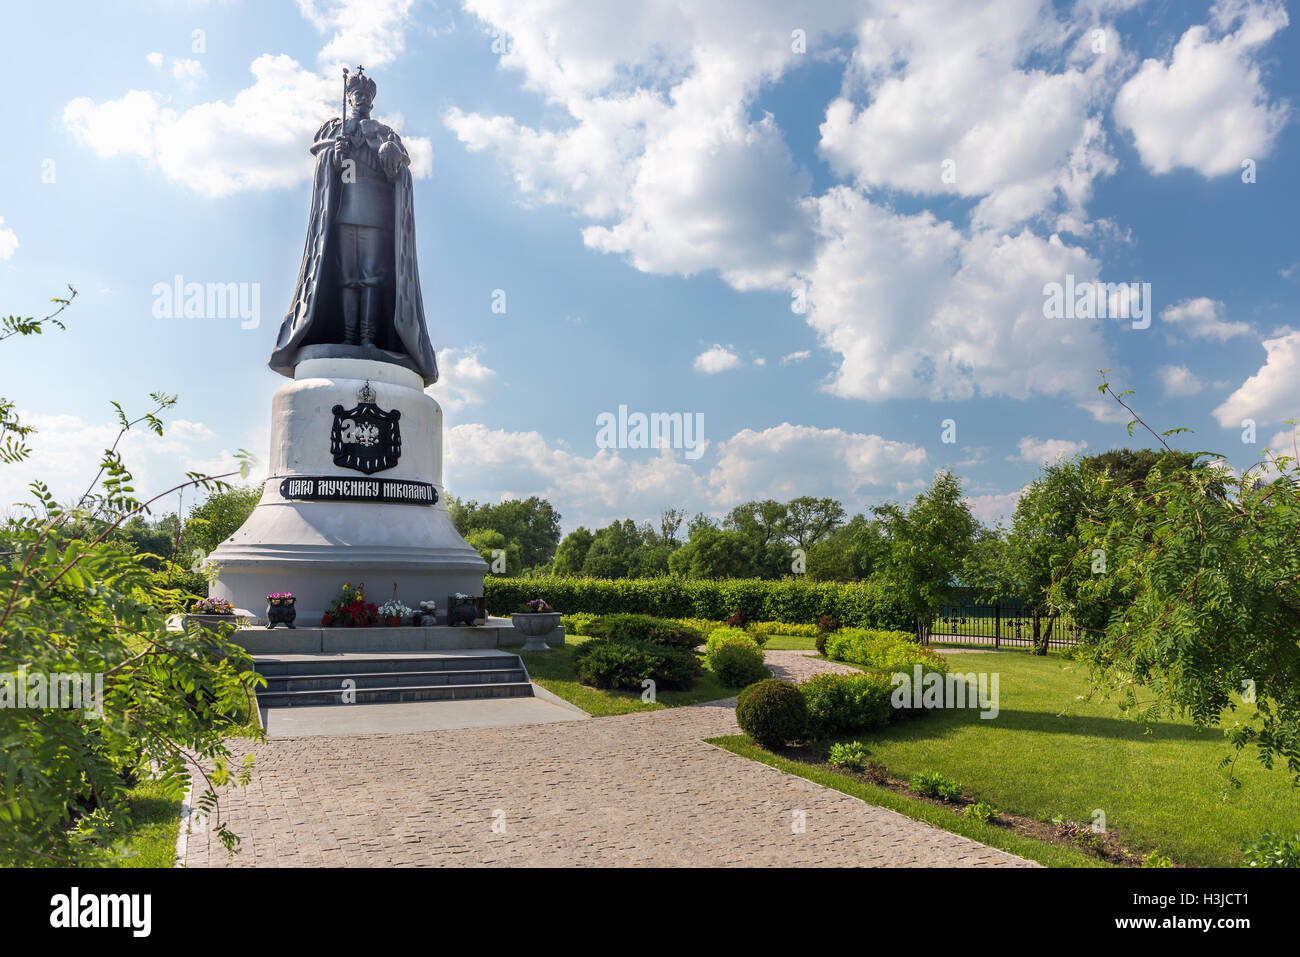 Monument to Nicholas II, the last Emperor of Russia. Stock Photo